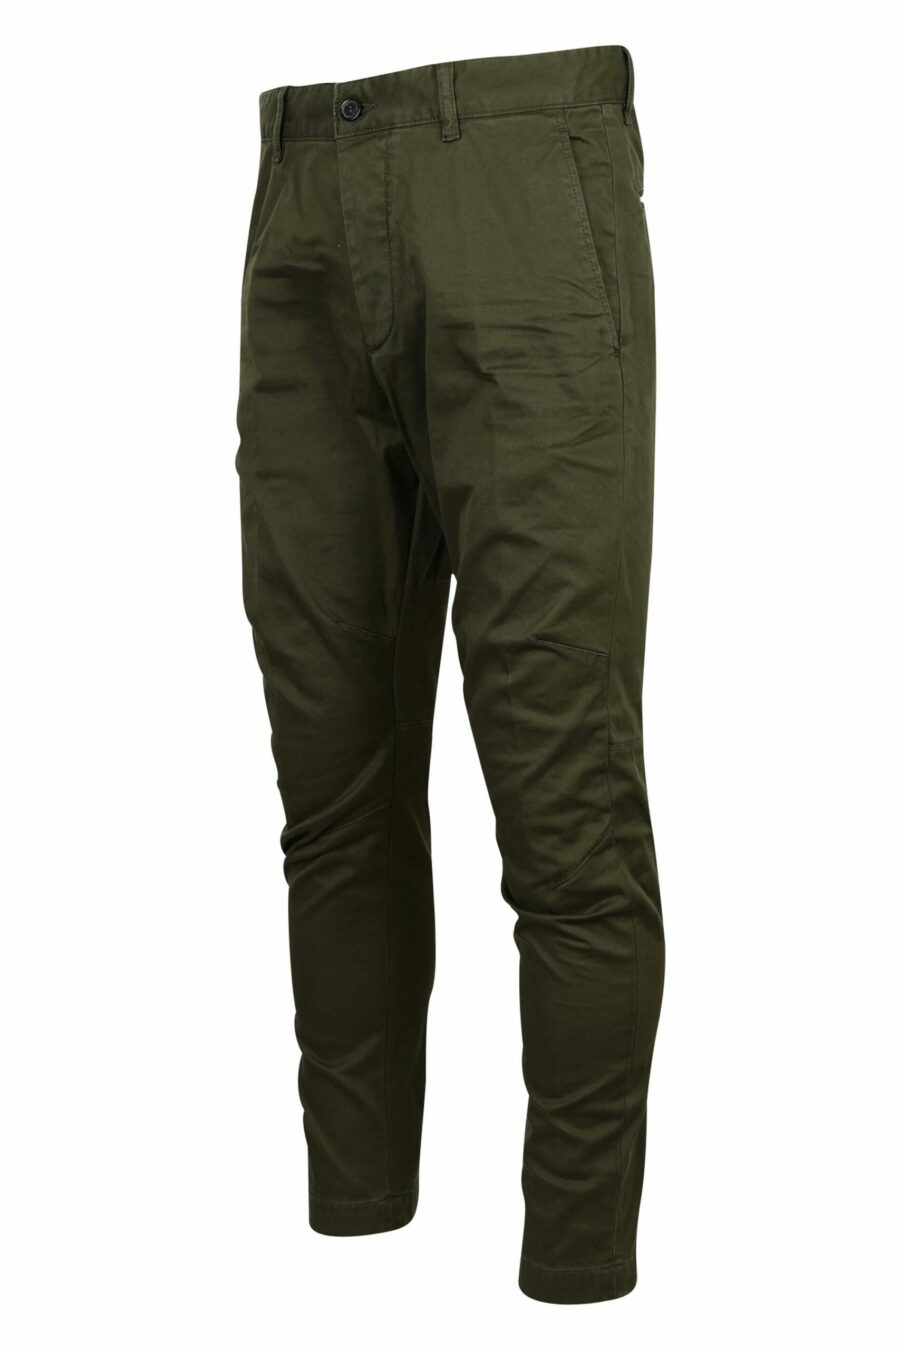 Pantalón verde militar "sexy chino" - 8054148321741 1 scaled